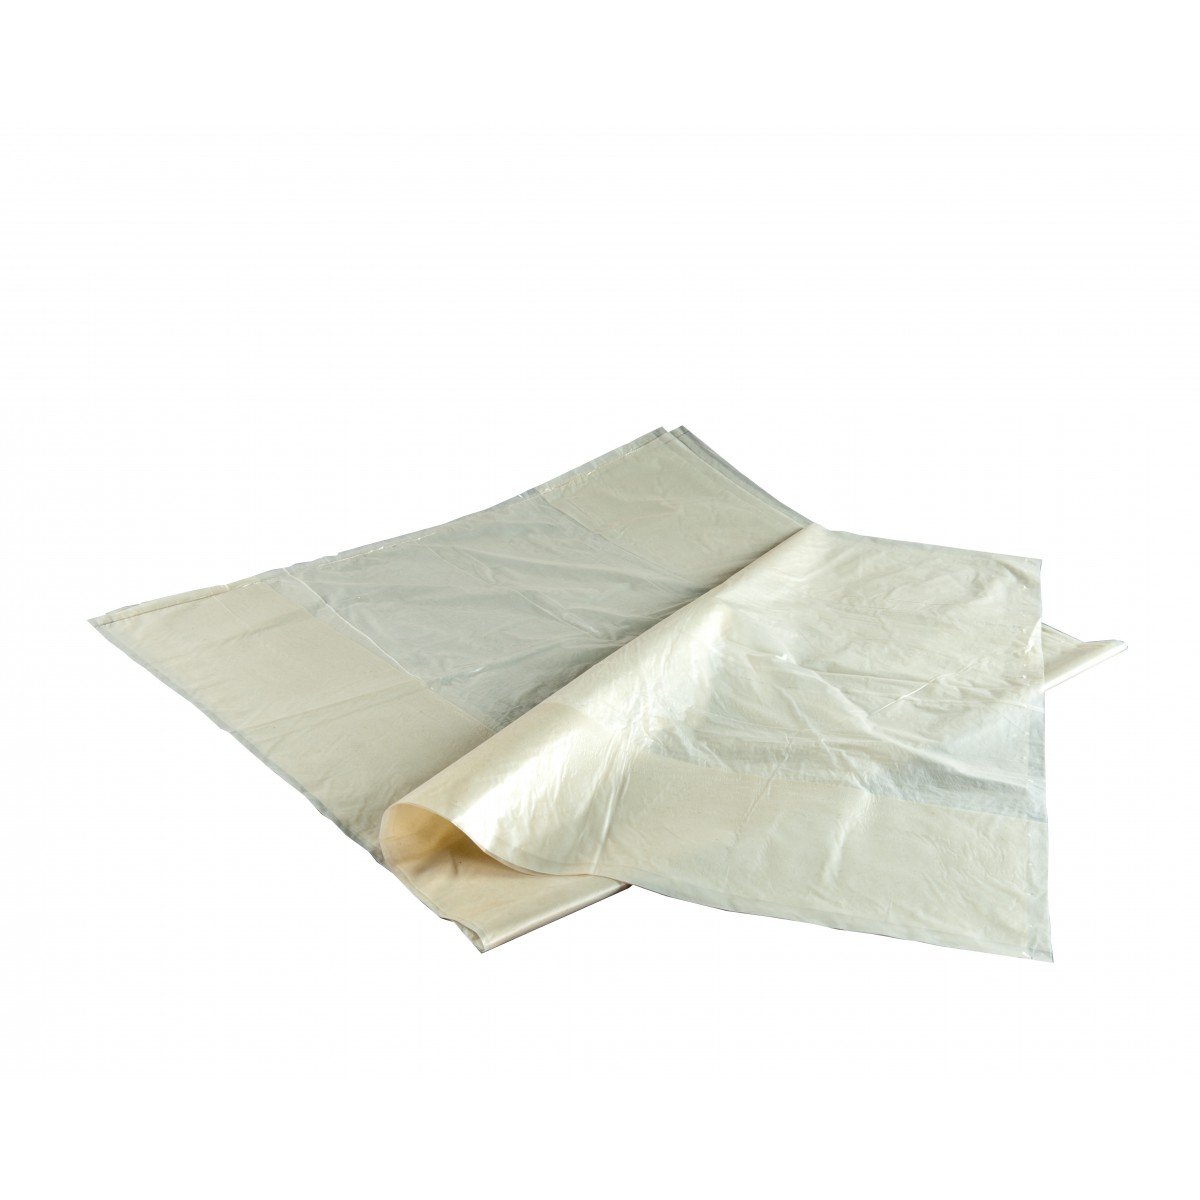 Dolav liner 75 bags per roll (not food safe) 27mu